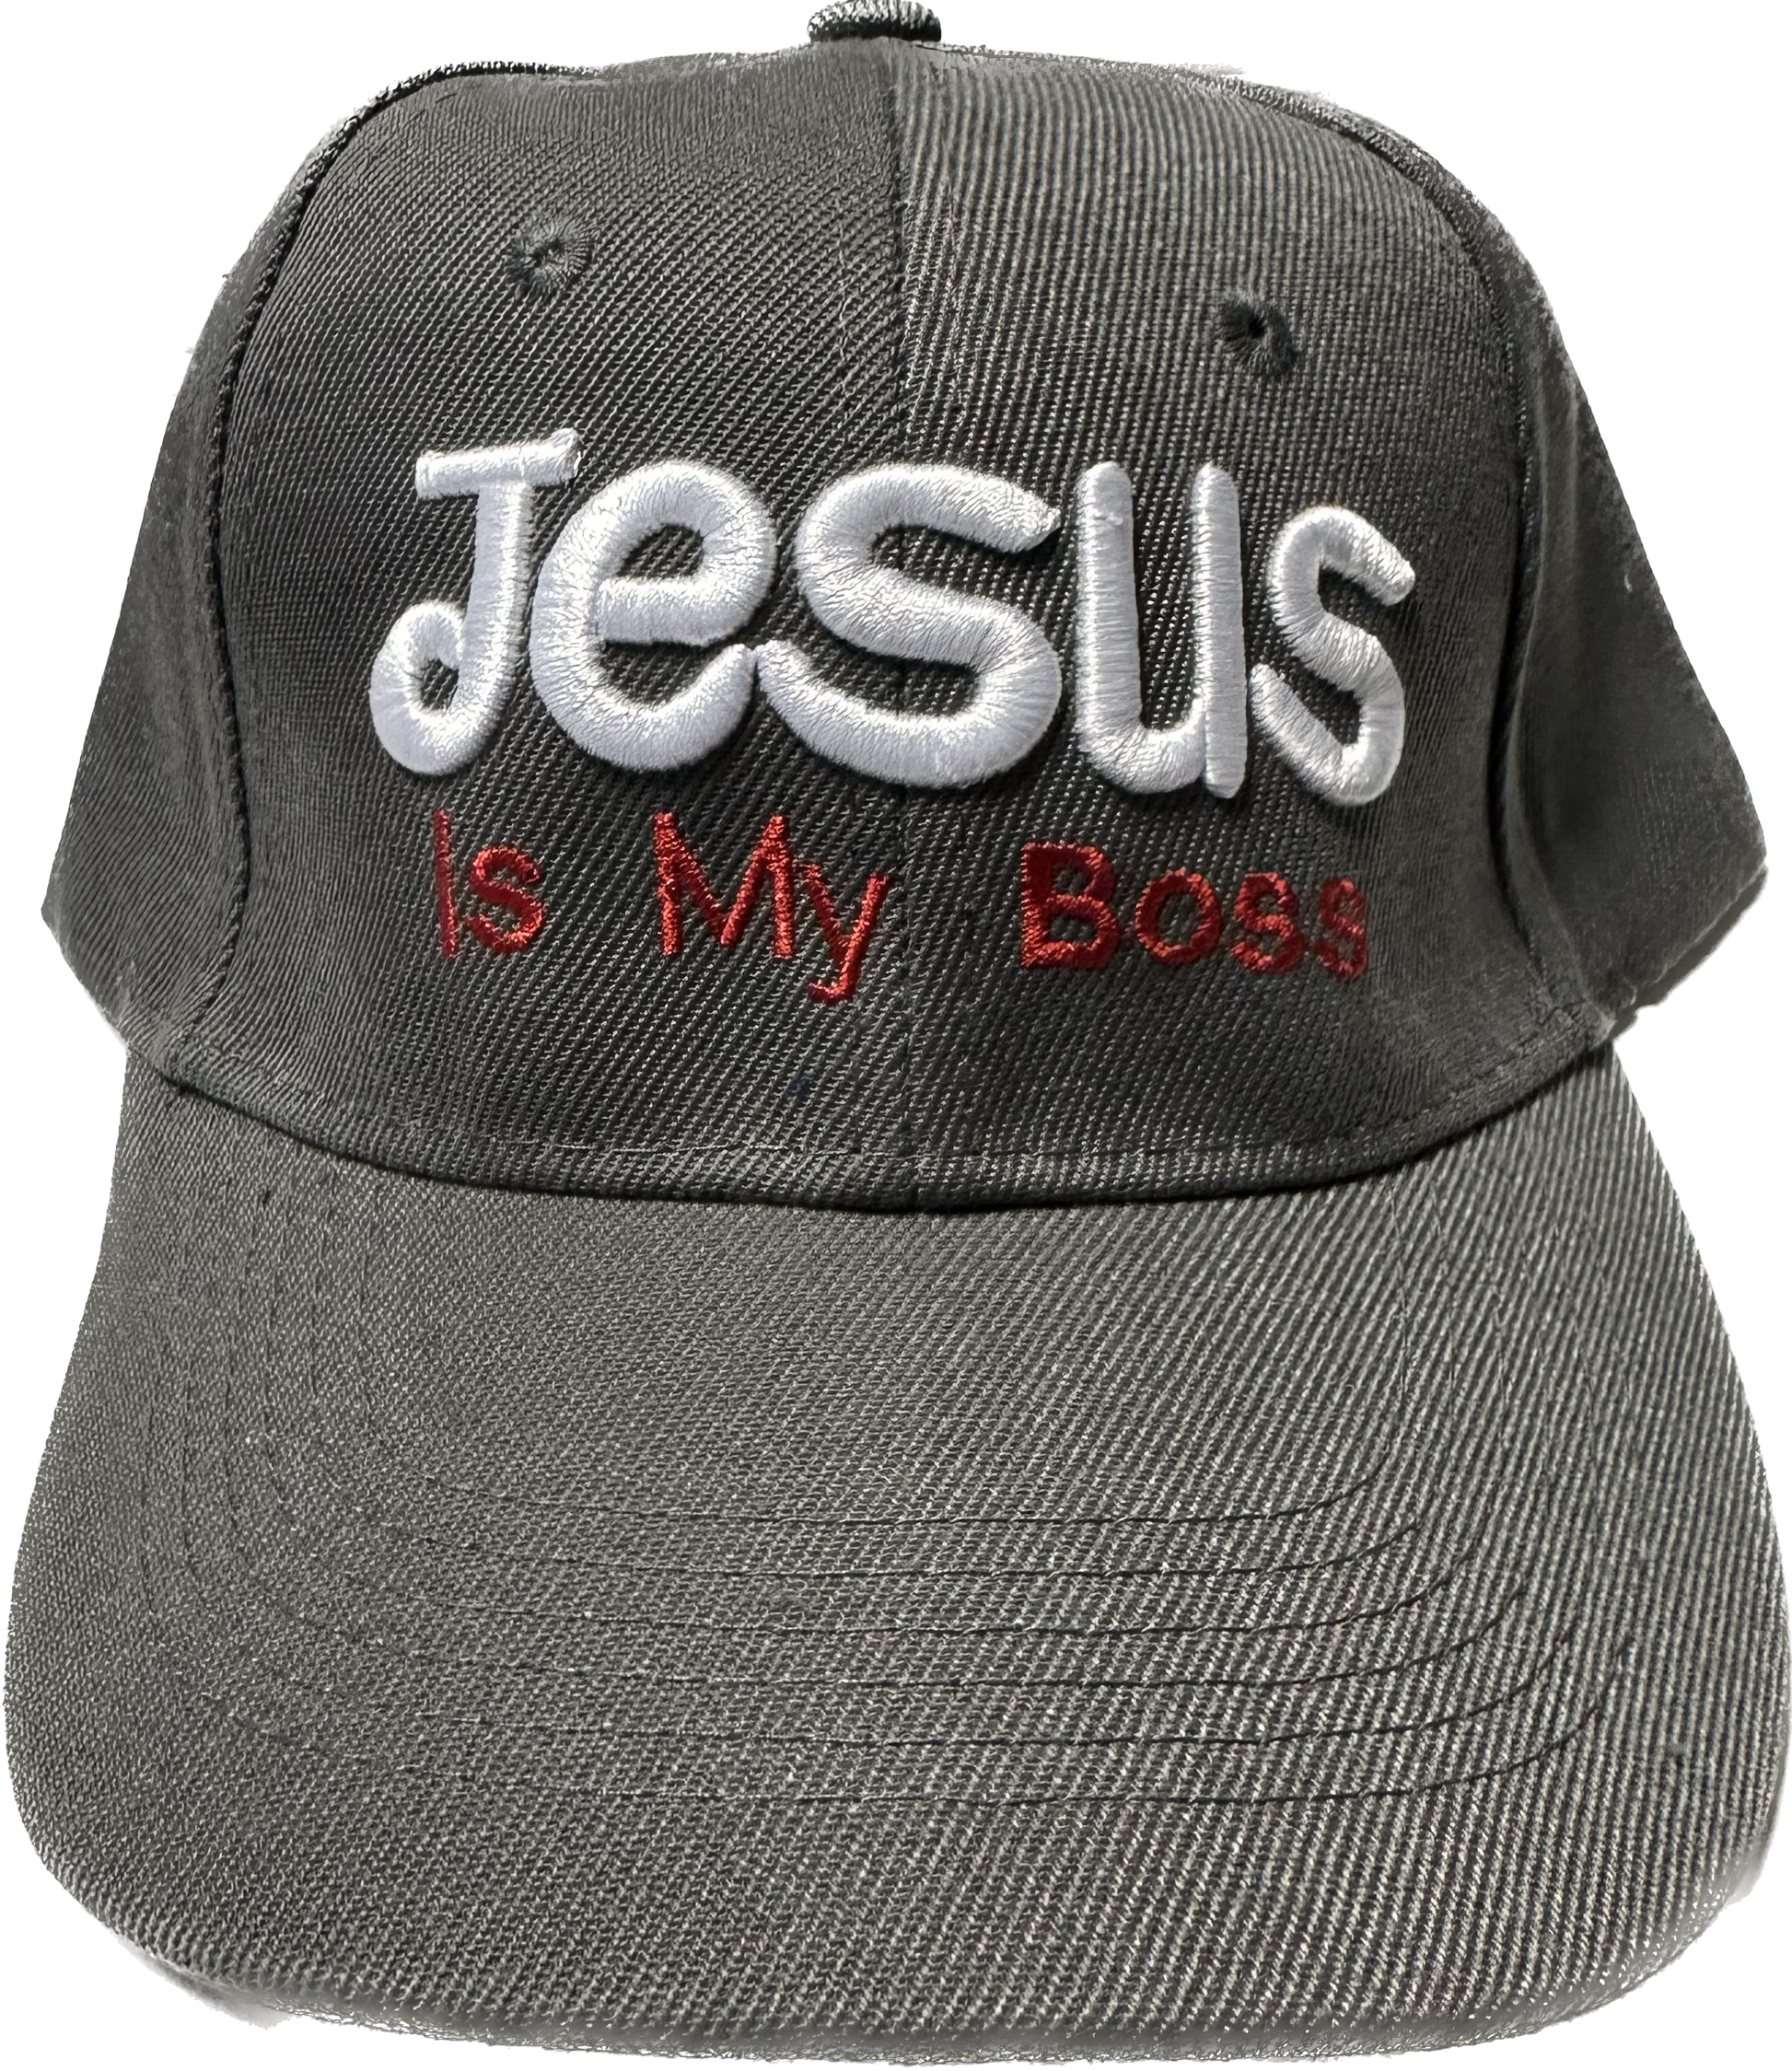 Dark Gray Jesus Is My Boss Hat